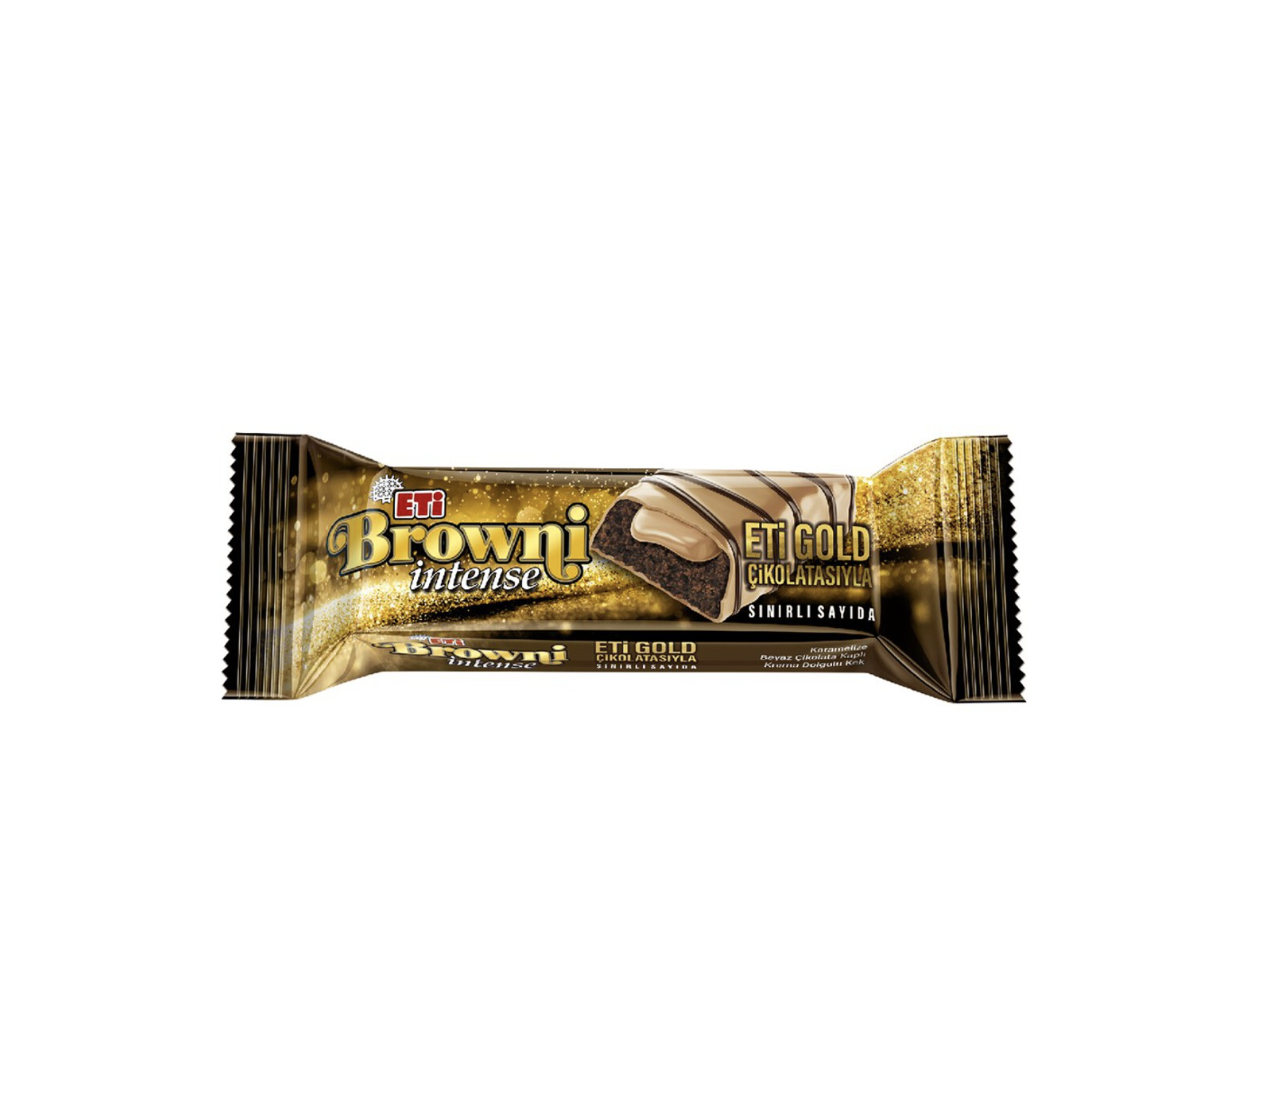 Eti Brownie Intense Gold 48g / 1.69 oz, 6 packs